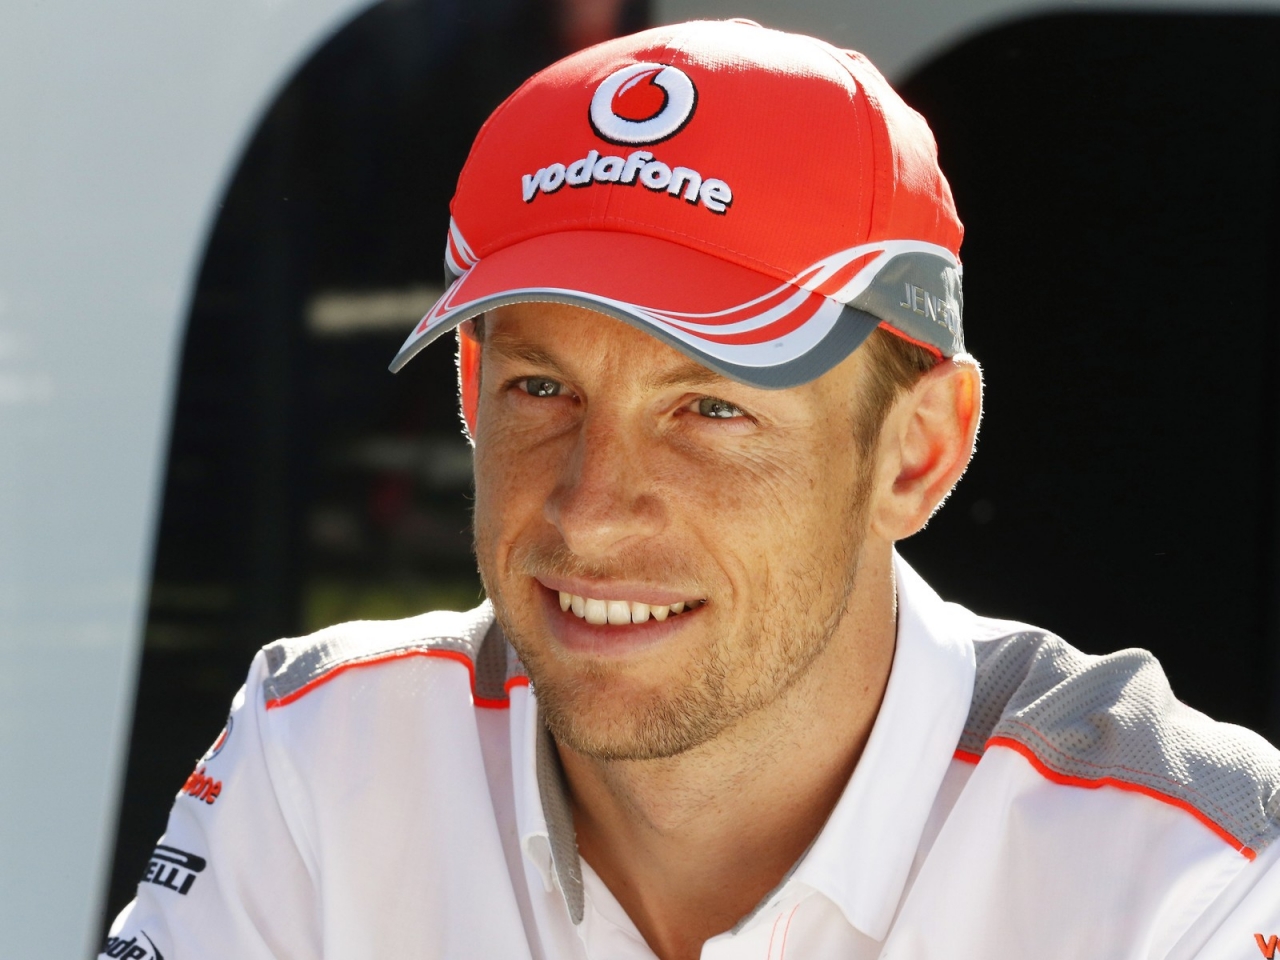 Jenson Button Vodafone for 1280 x 960 resolution